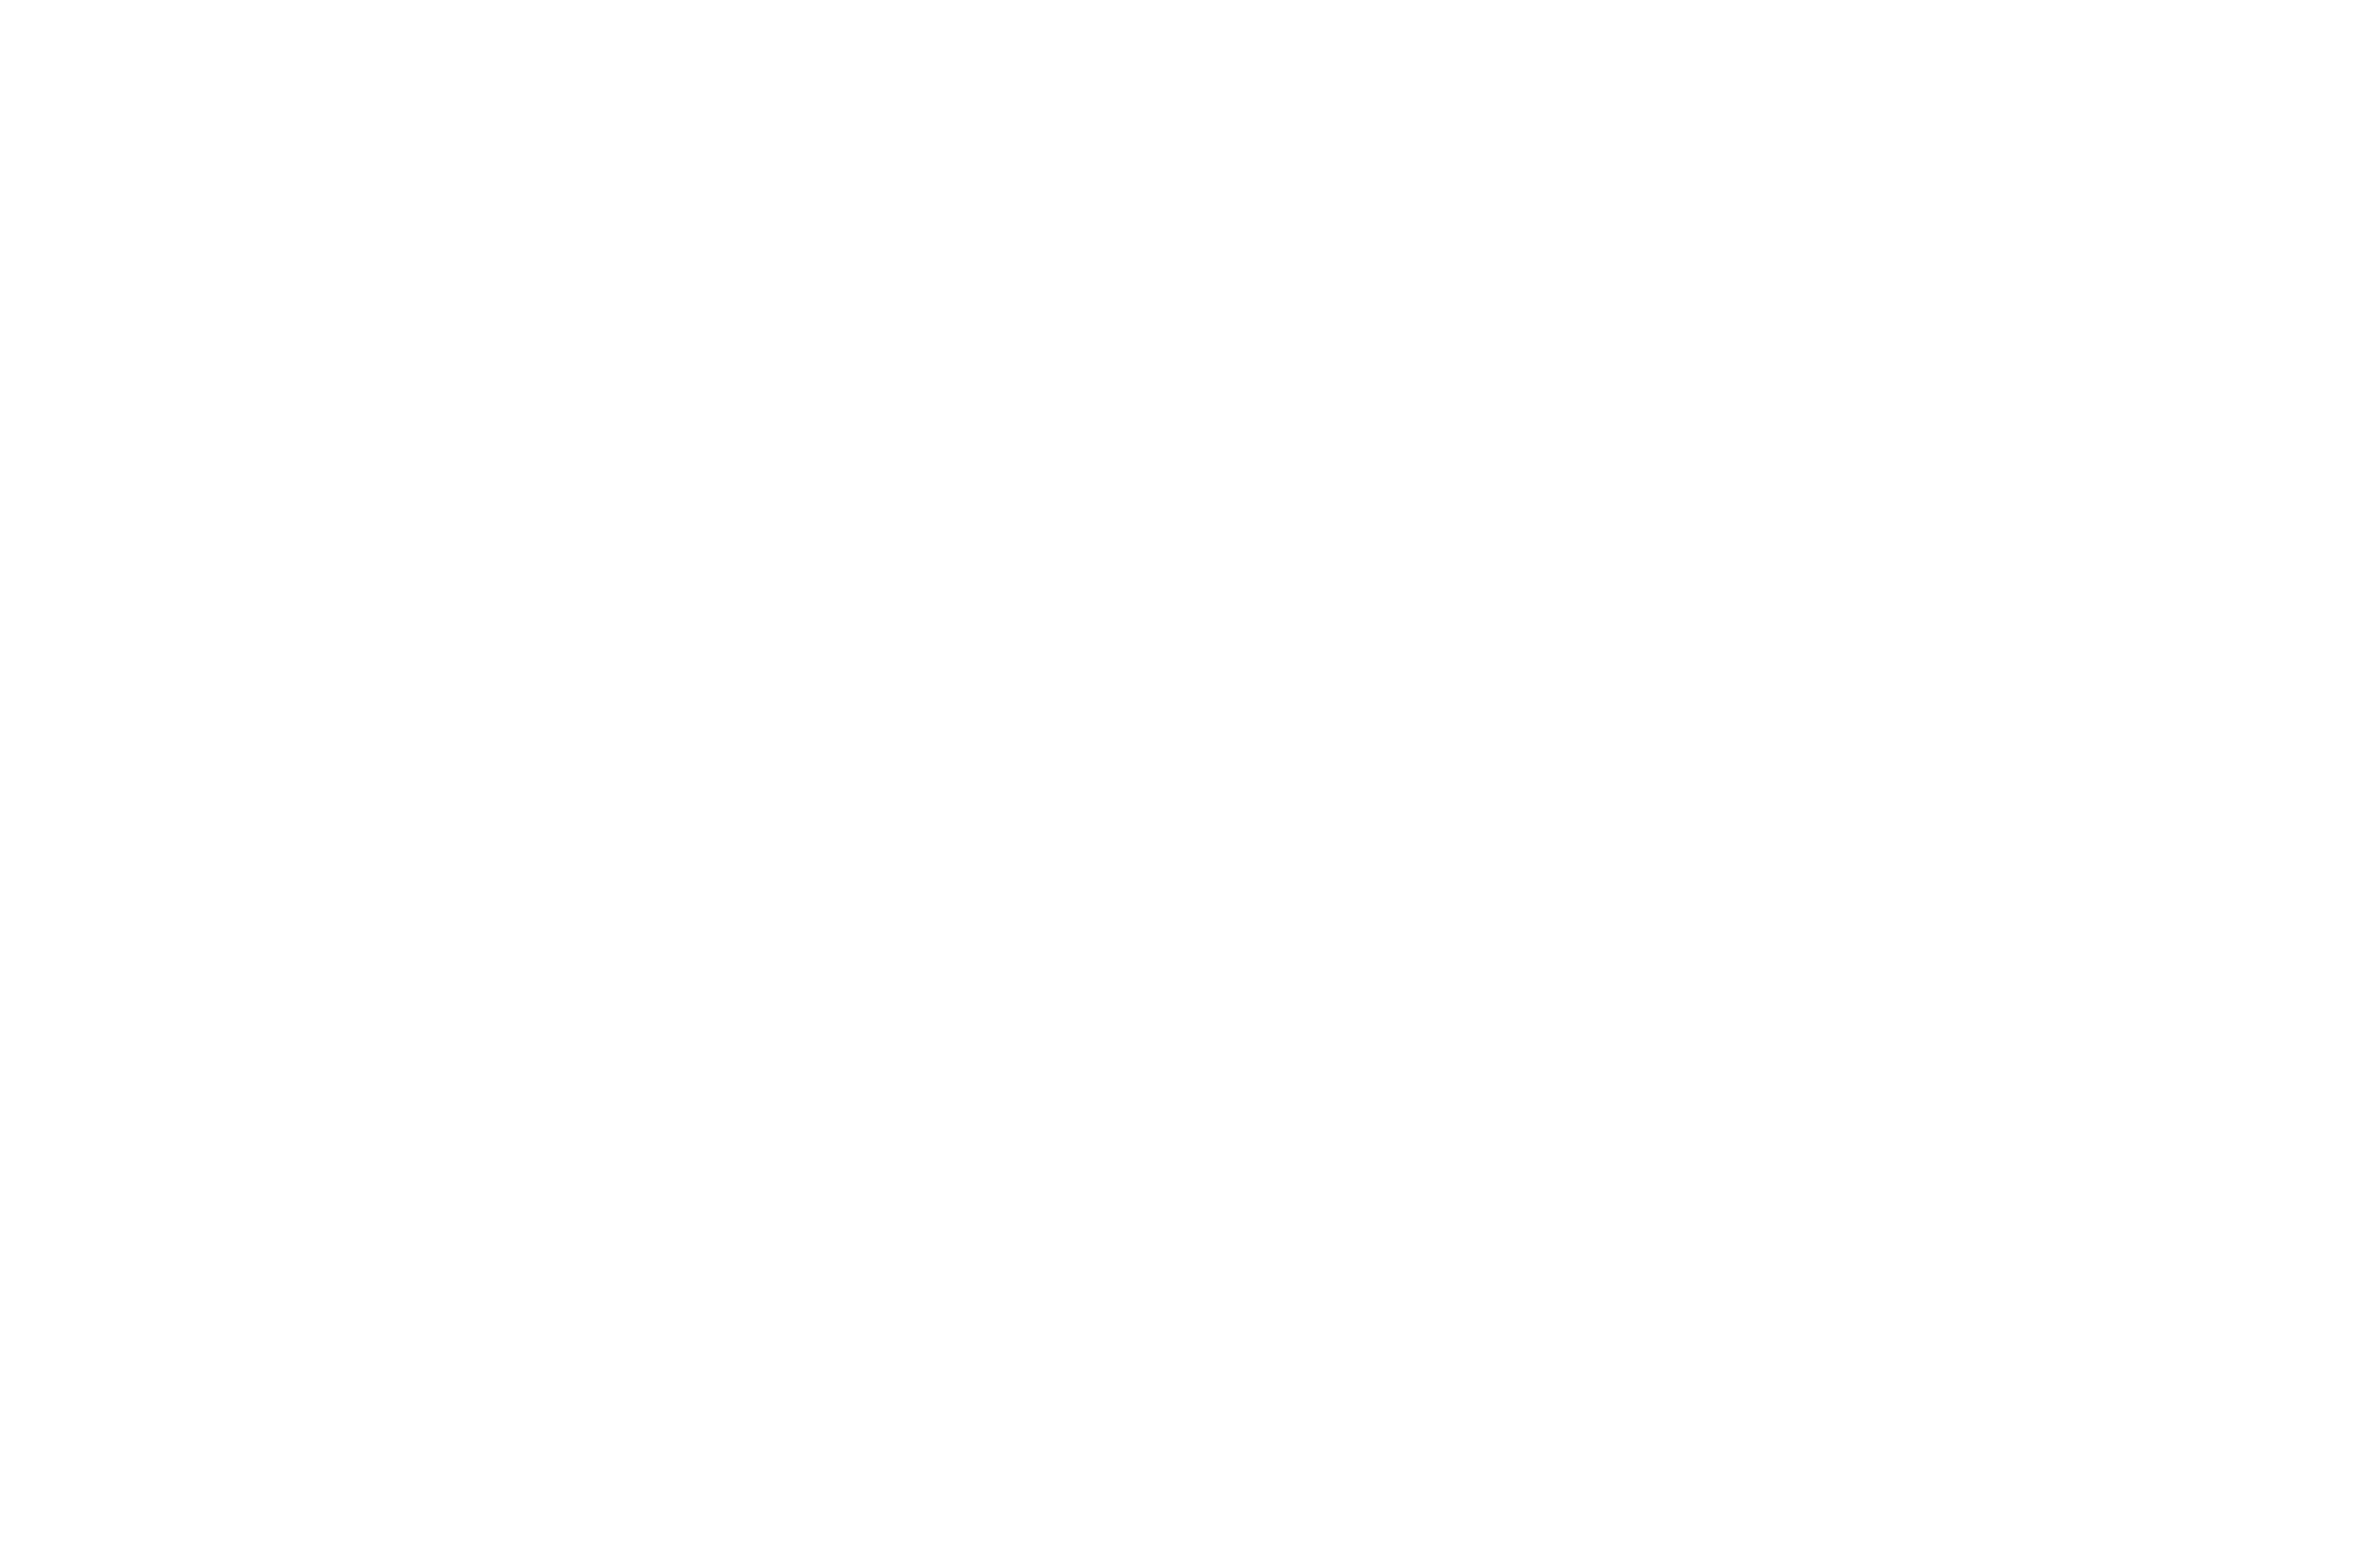 Cody Cordwell